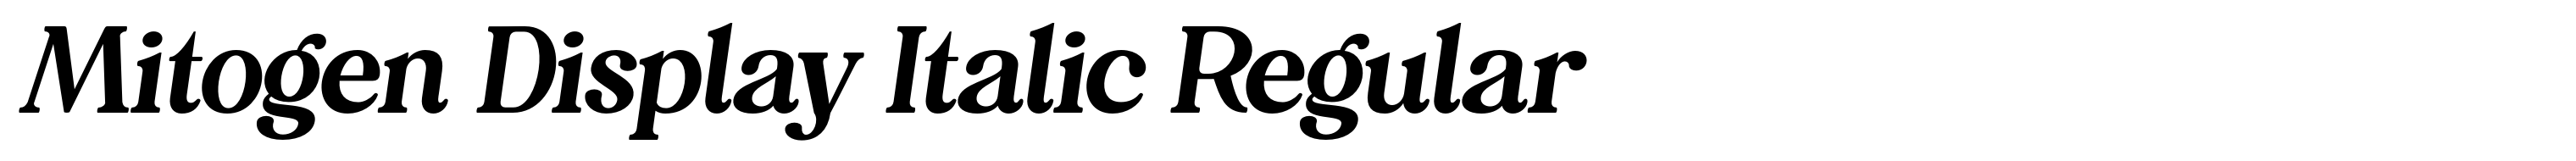 Mitogen Display Italic Regular